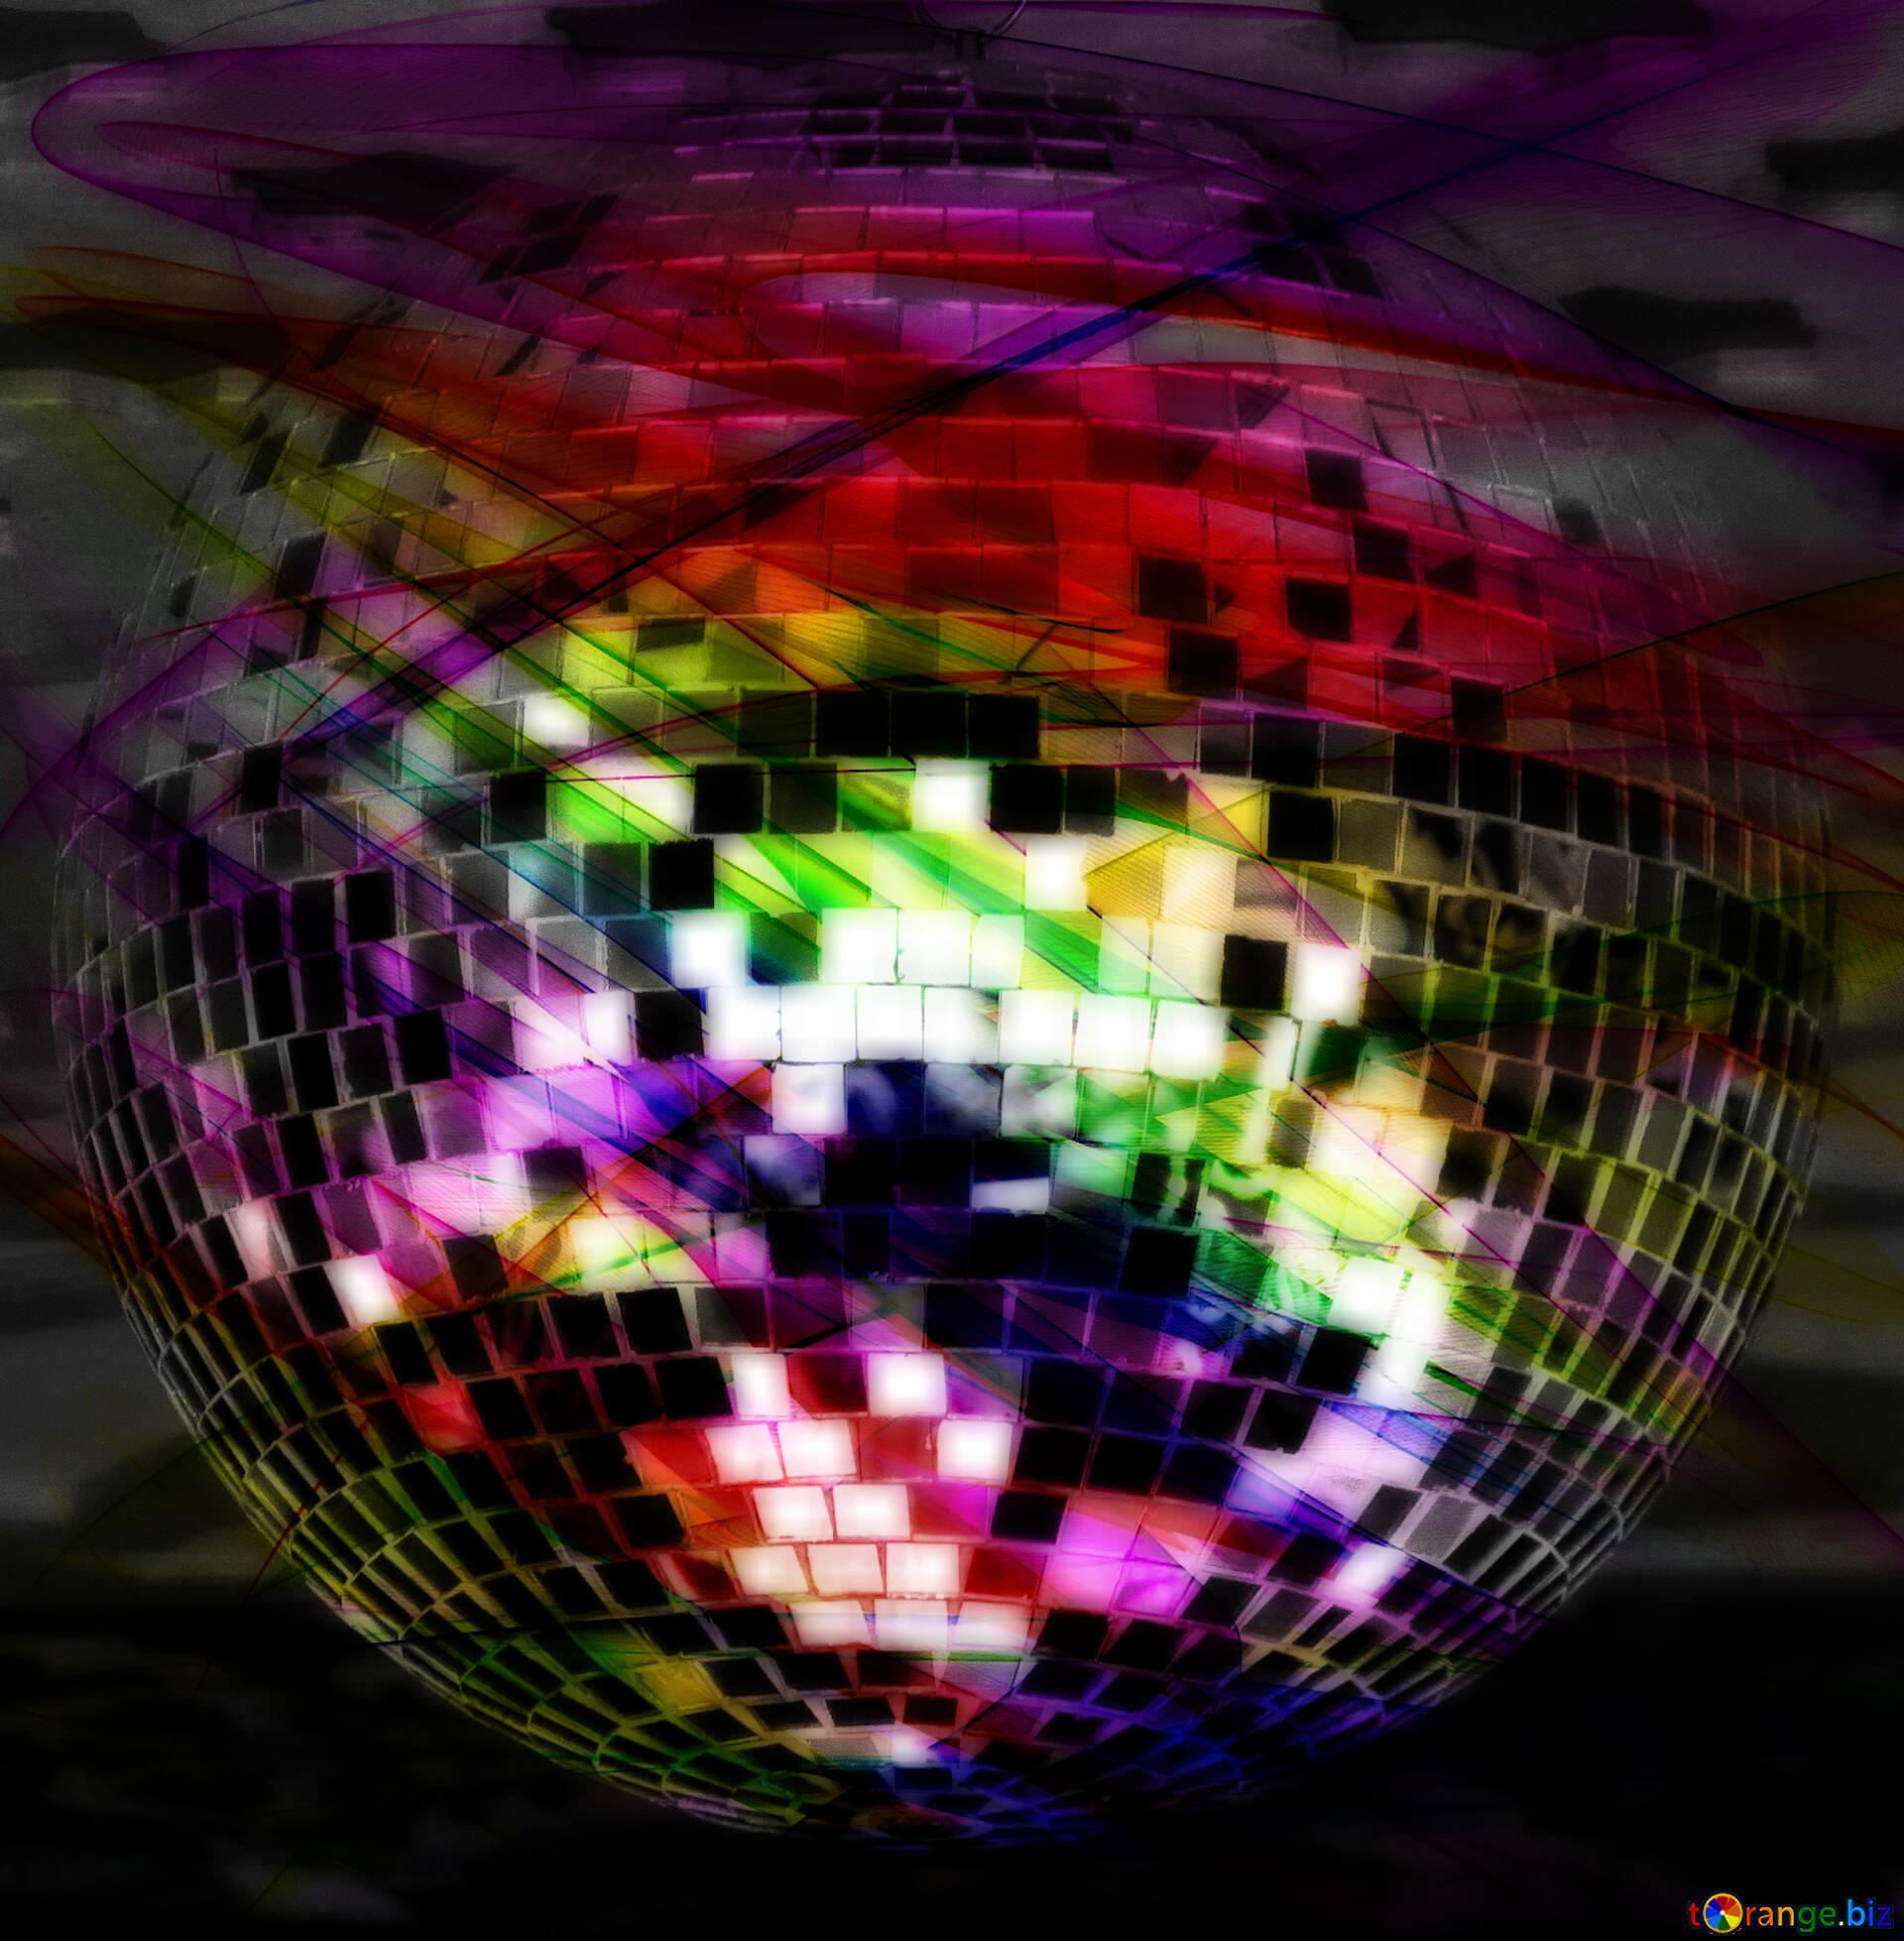 Download Free Picture Disco Ball Lamp Fractal Dark Music Background On Cc By License Free Image Stock Torange Biz Fx 215217